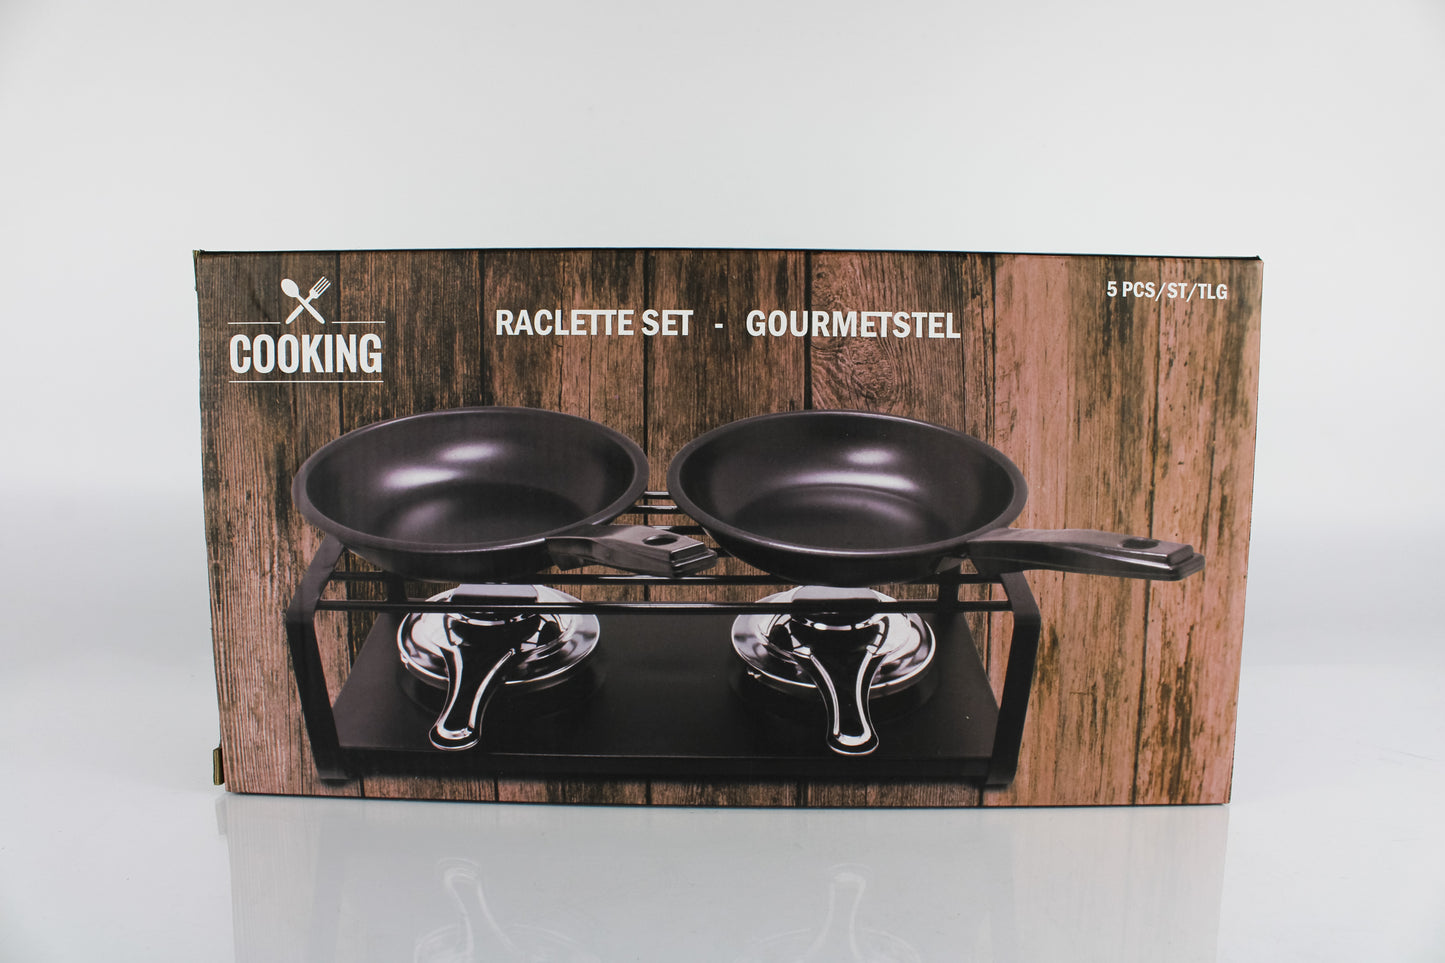 Raclette set / Gourmetstel